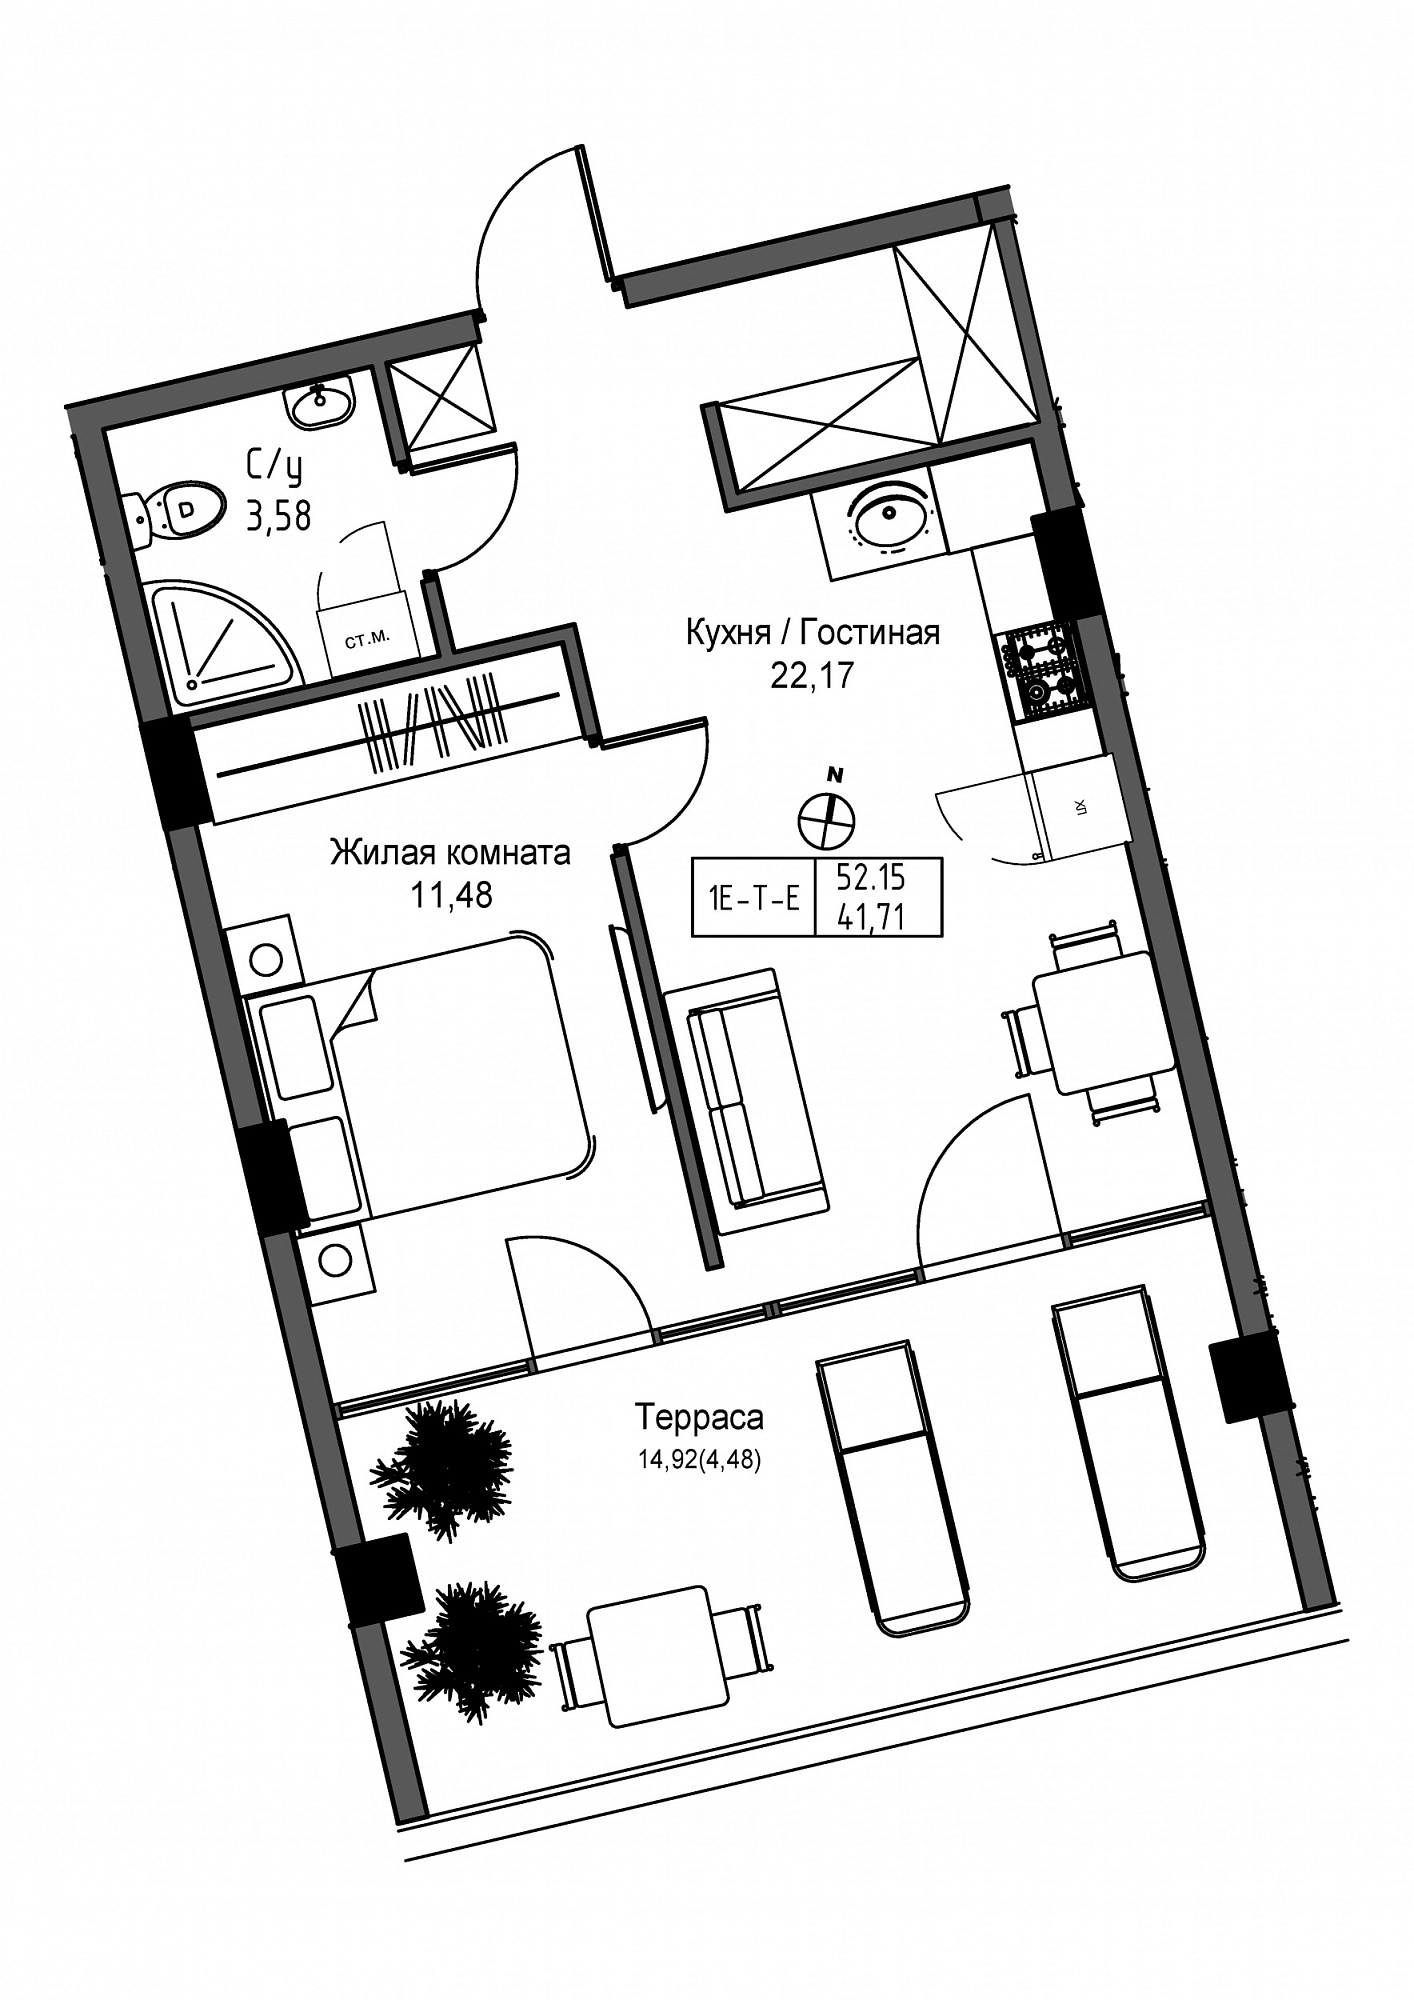 Планування 1-к квартира площею 41.71м2, UM-004-03/0008.